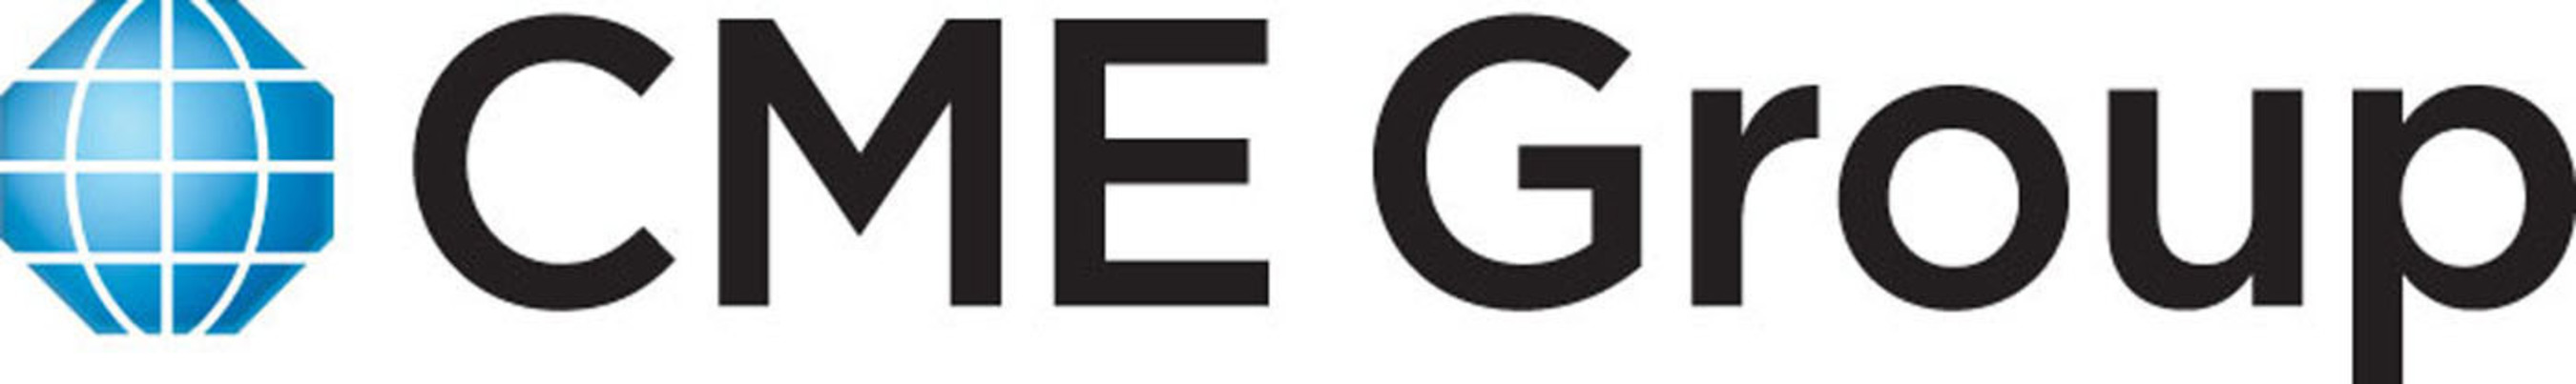 CME Group logo. (PRNewsFoto/CME Group) (PRNewsFoto/CME GROUP)